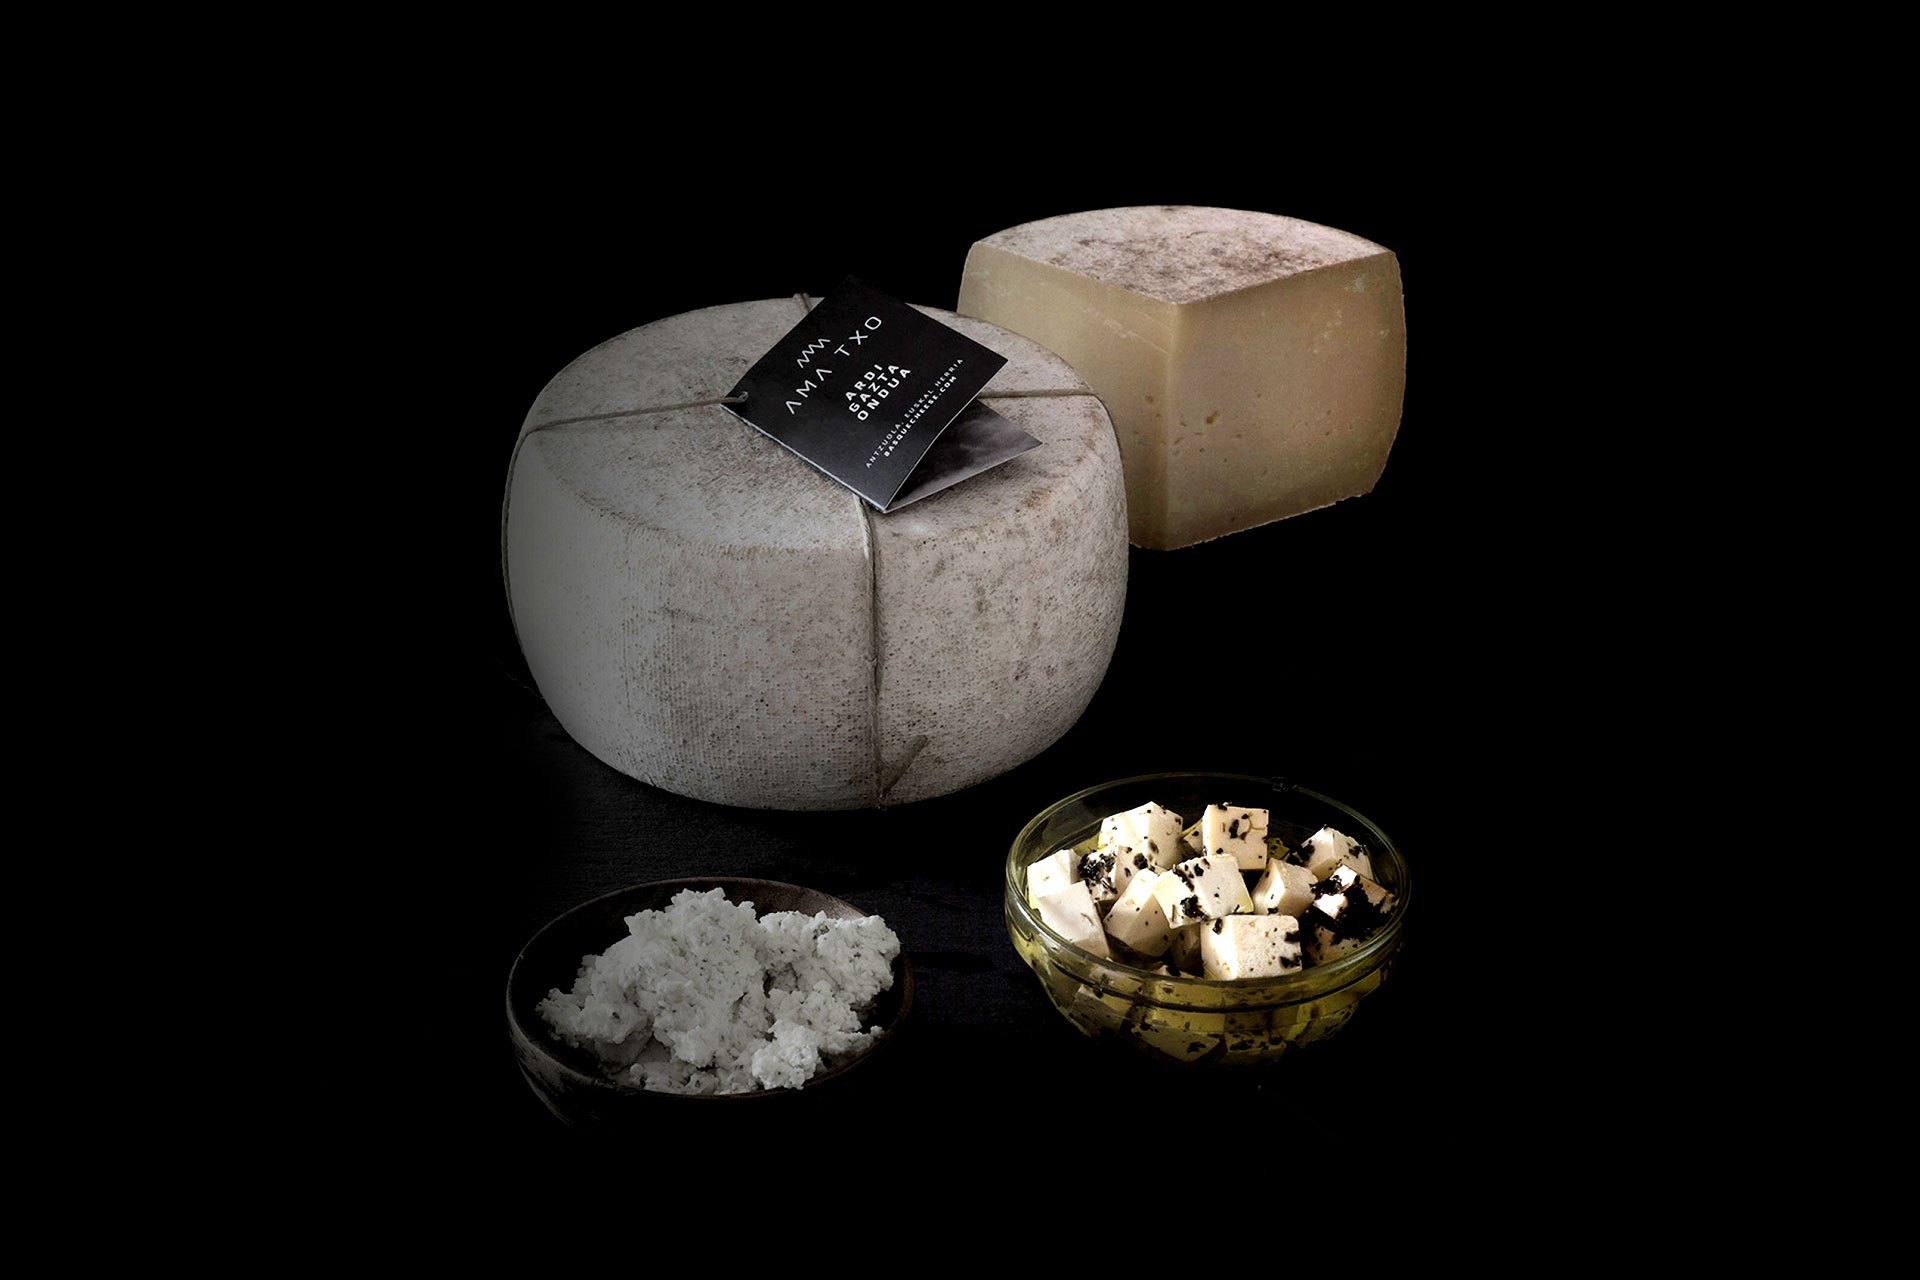 Amatxo, Basque Cheese - design and brand positioning by Joseba Attard